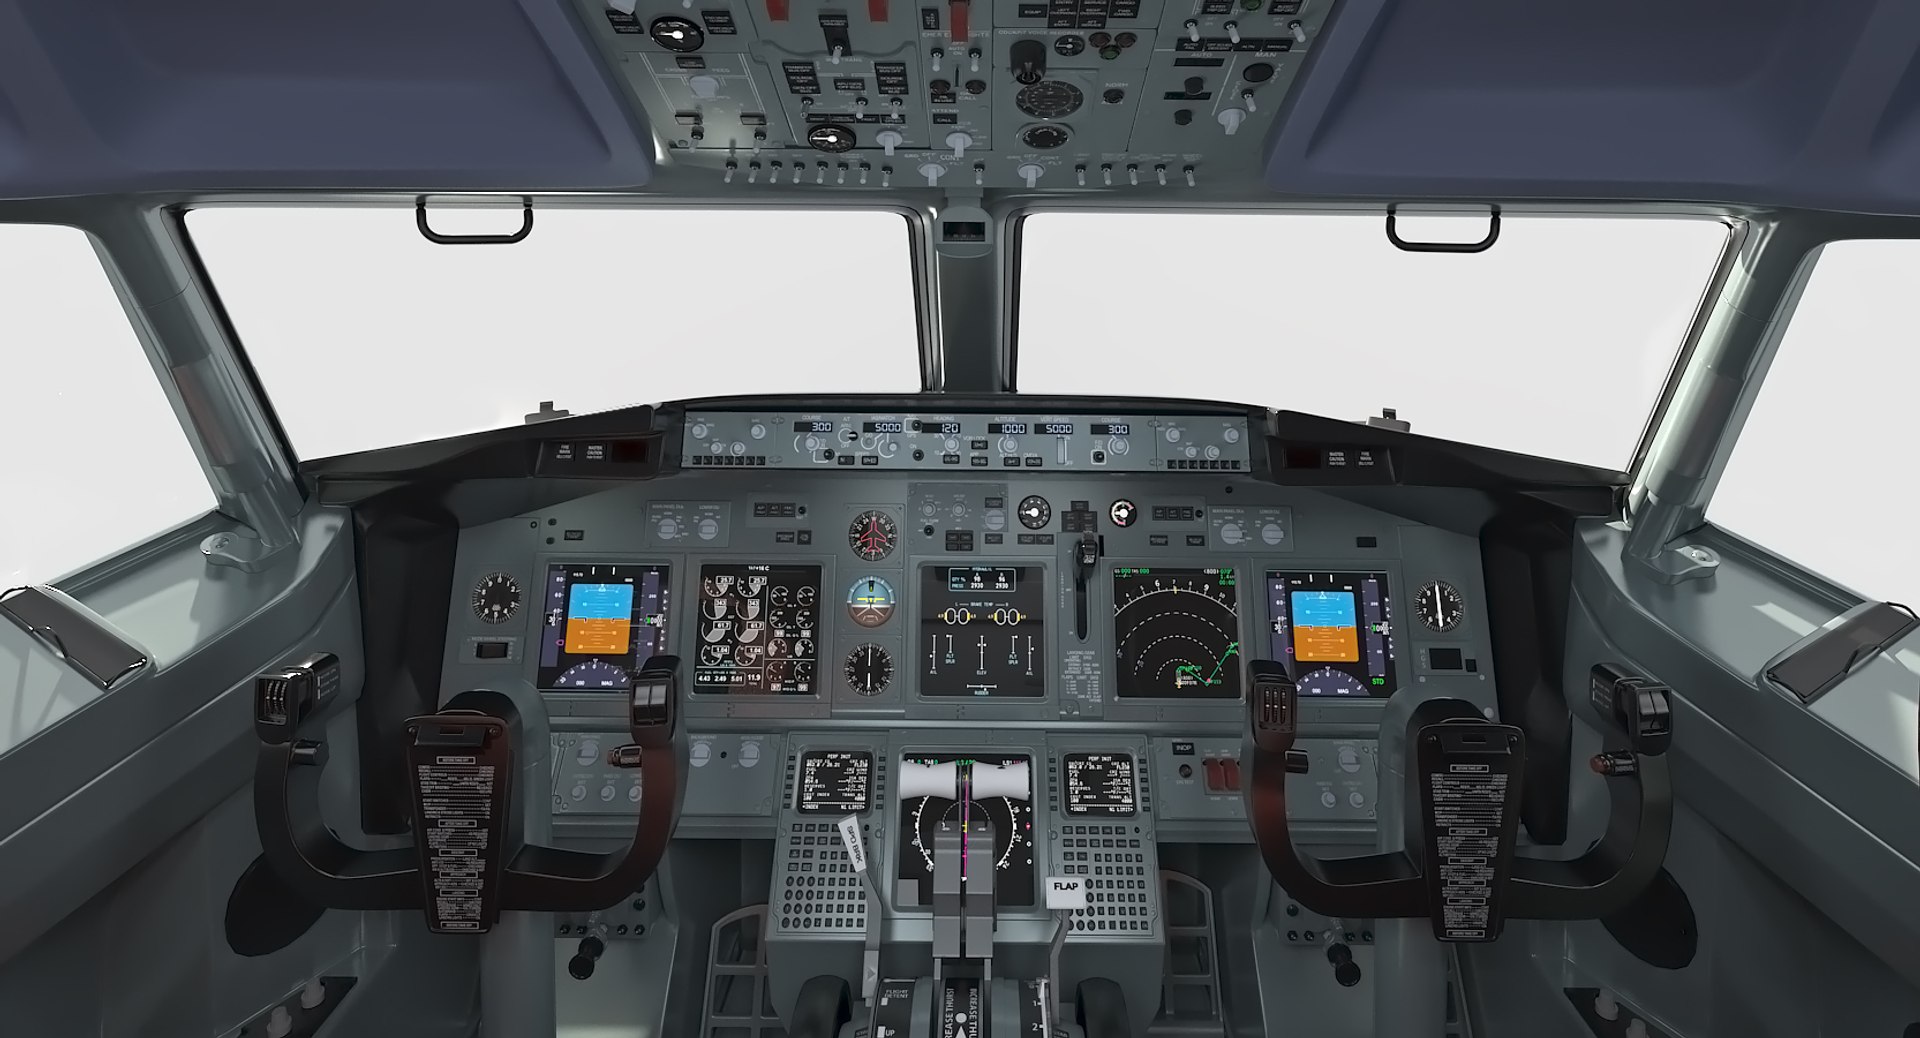 boeing 737 cockpit 3D model https://p.turbosquid.com/ts-thumb/oo/gnpP3P/dhmgq2Yx/boeing737cockpit3dsmodel001/jpg/1501613186/1920x1080/fit_q87/39dbcdfafea4938c9eb6ac89928a5b191c7e4611/boeing737cockpit3dsmodel001.jpg